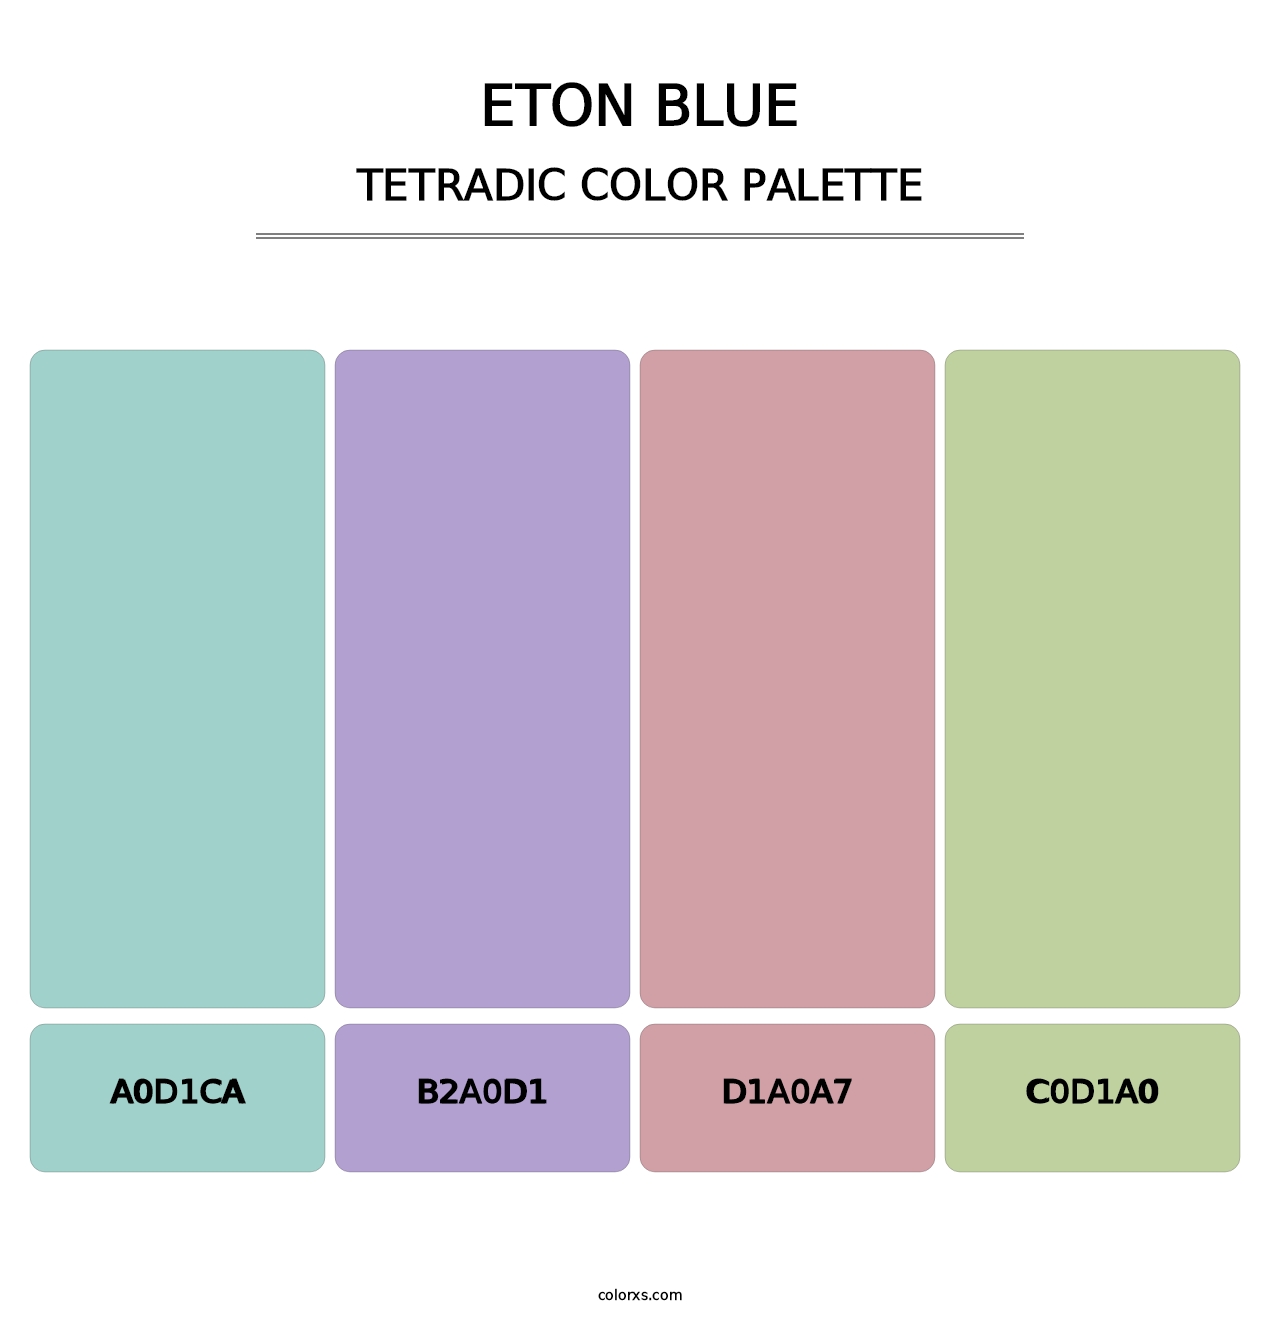 Eton blue - Tetradic Color Palette